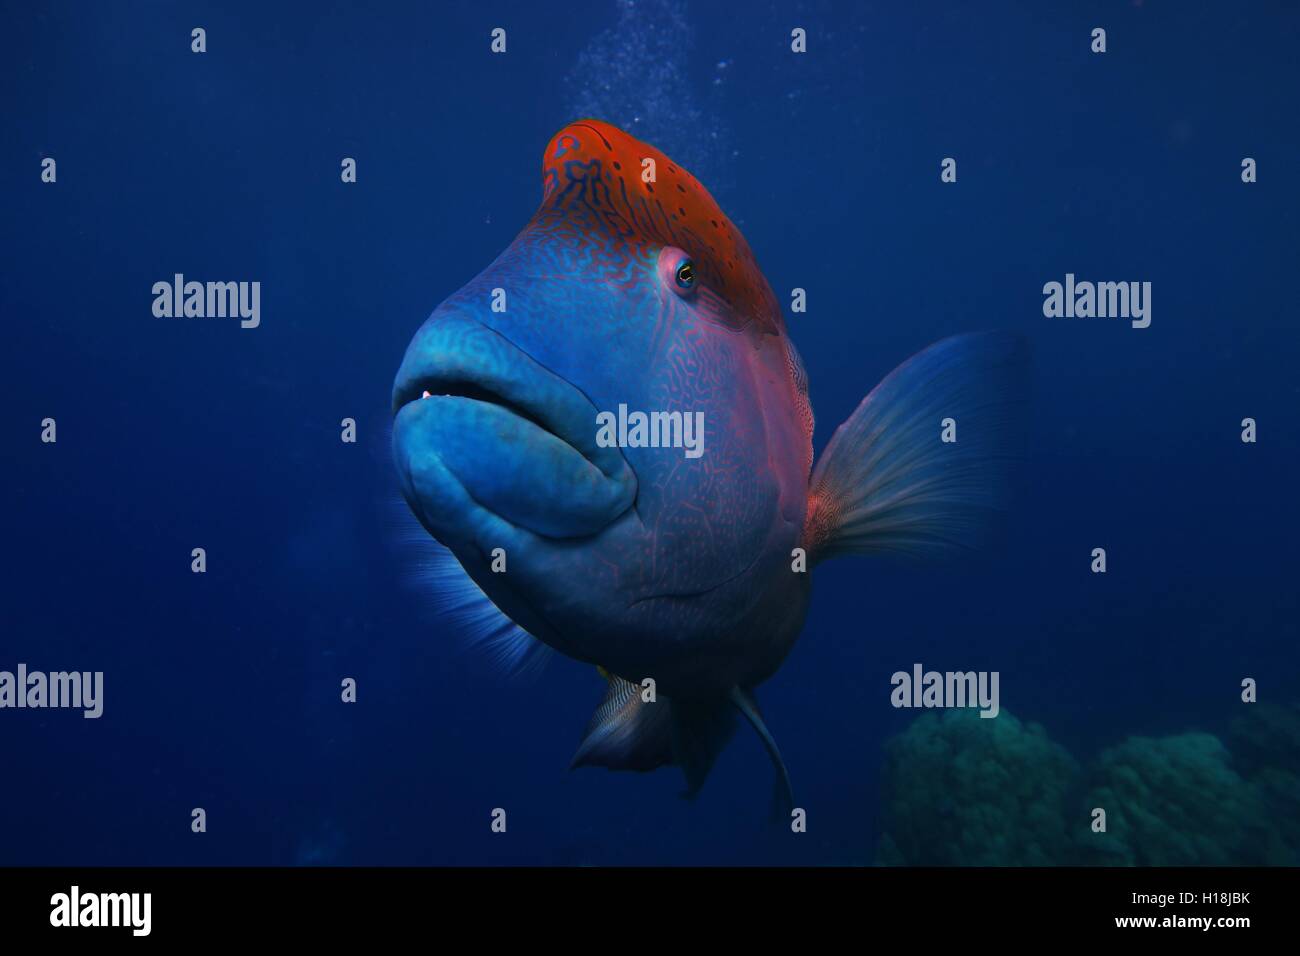 Big blue fish head on shot as if posing. Stock Photo